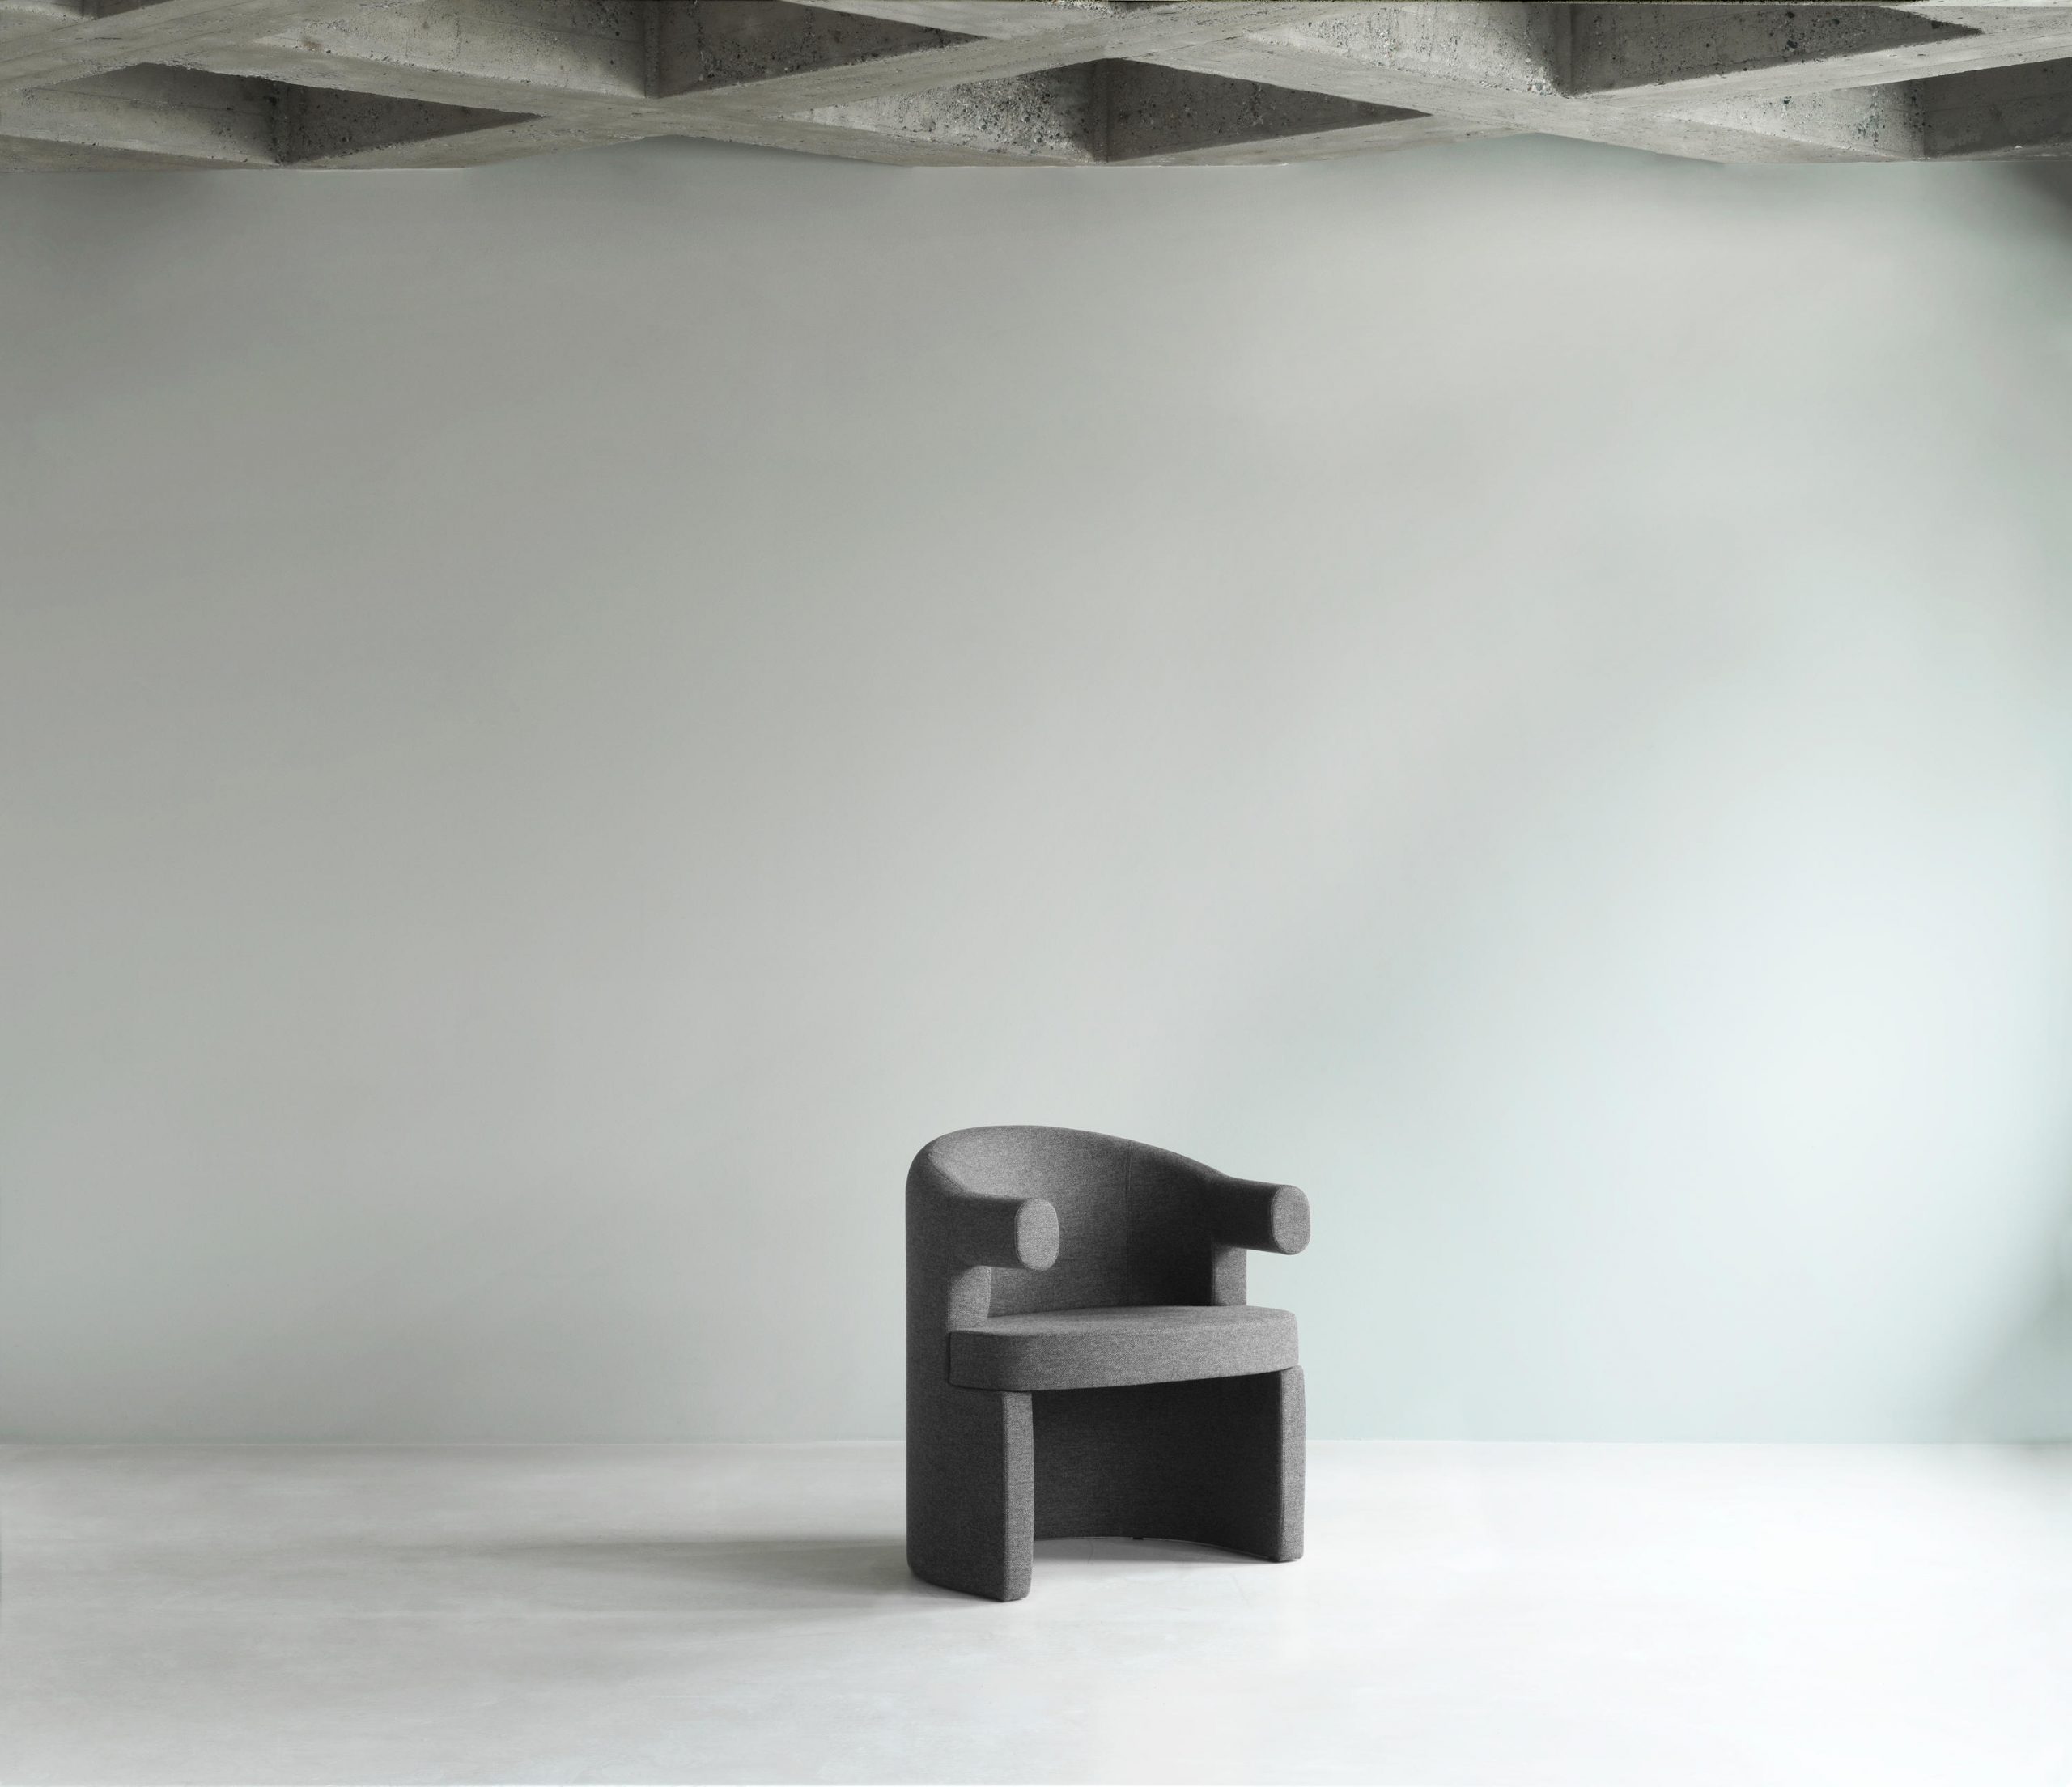 Burra Chair by Simon Legald for Normann Copenhagen